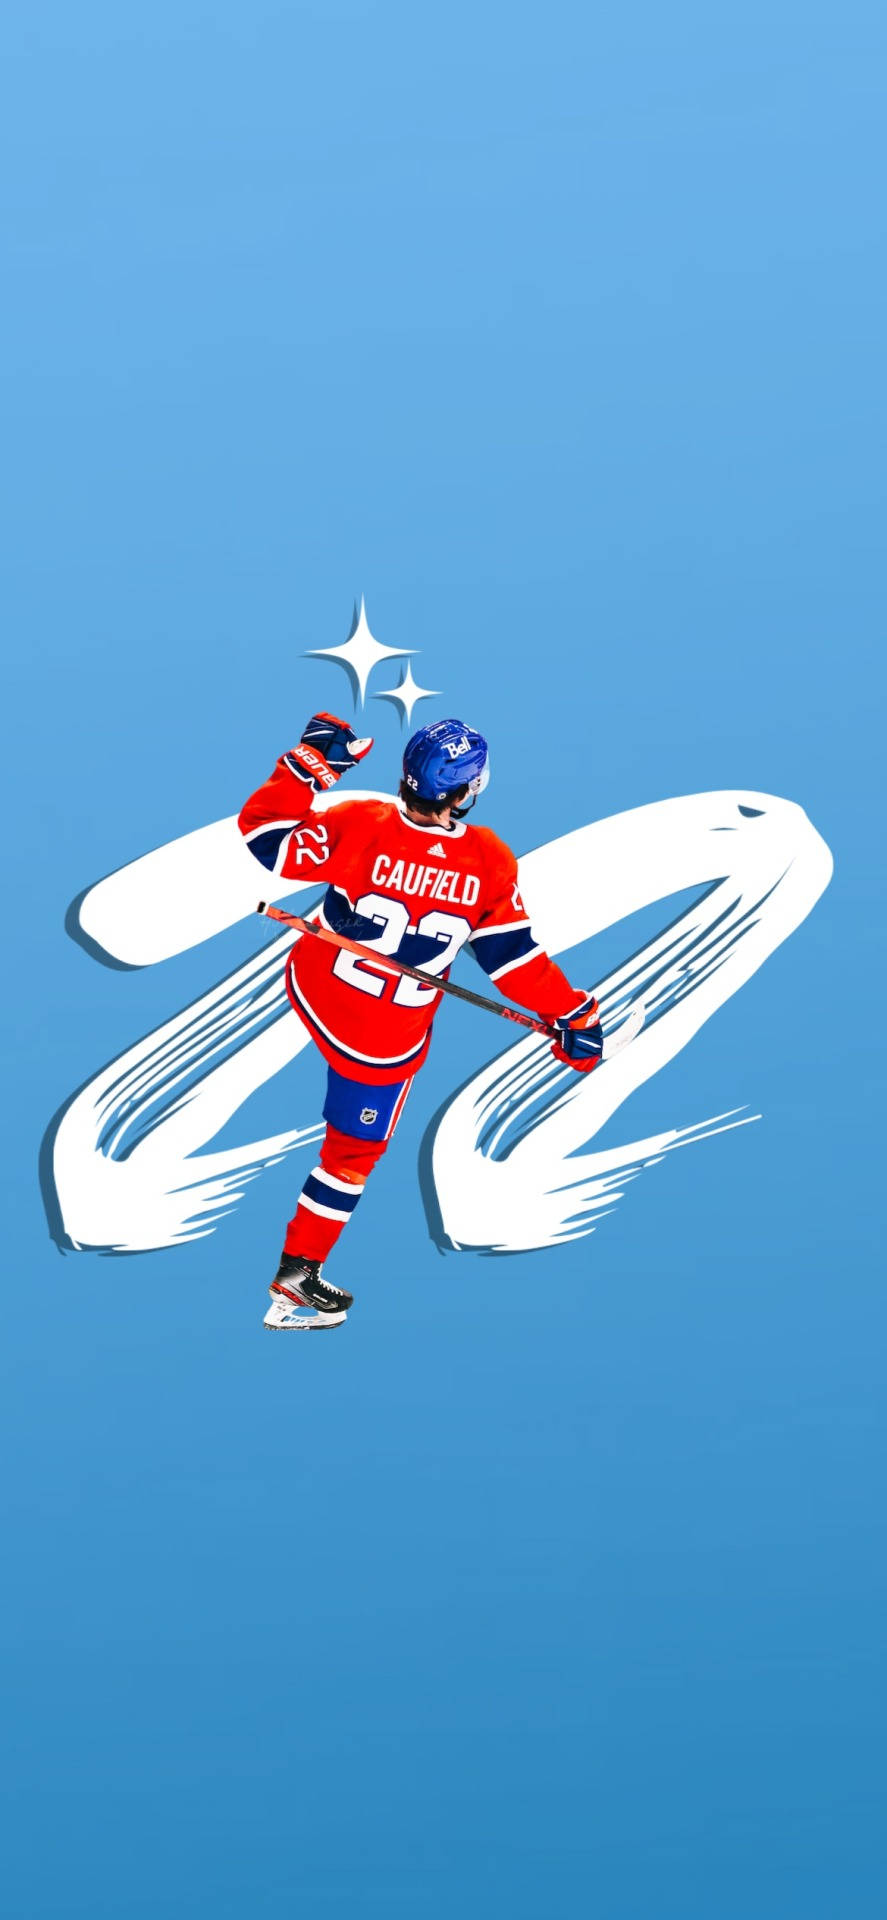 Colecaufield Montreal Canadiens Nummer 22 Spieler Wallpaper